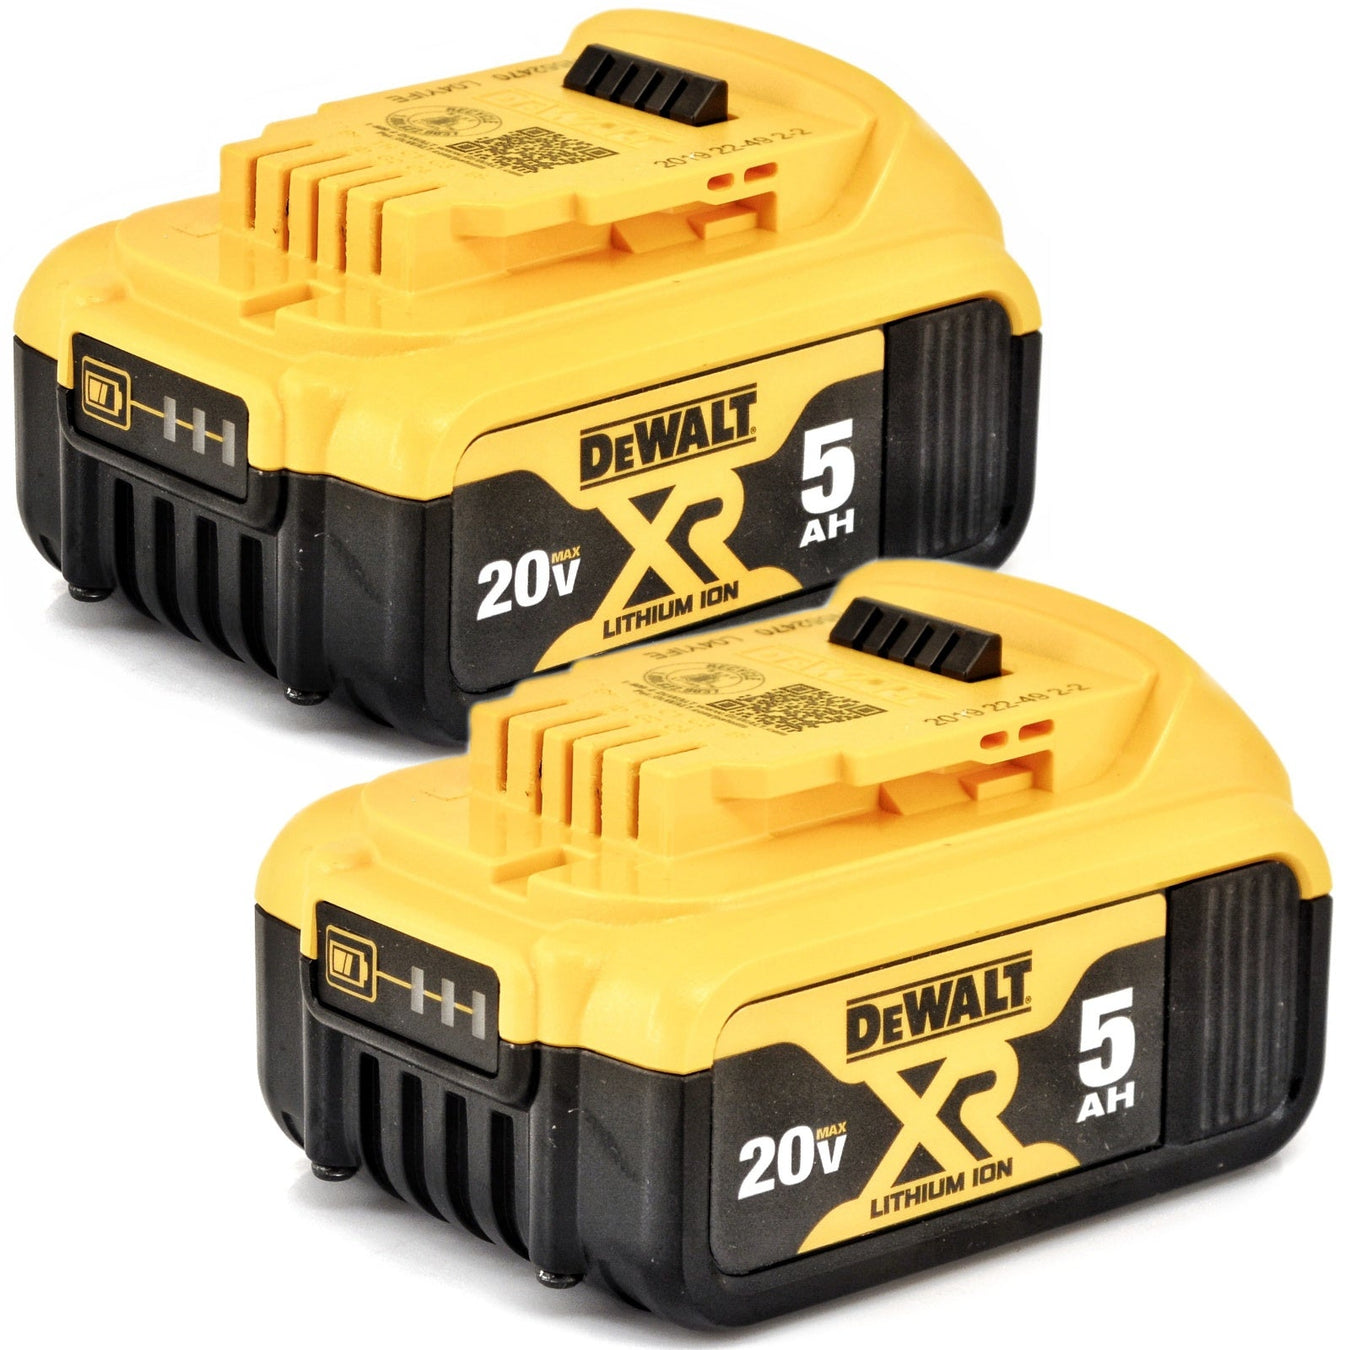 DCB205 Dewalt 5.0 battery